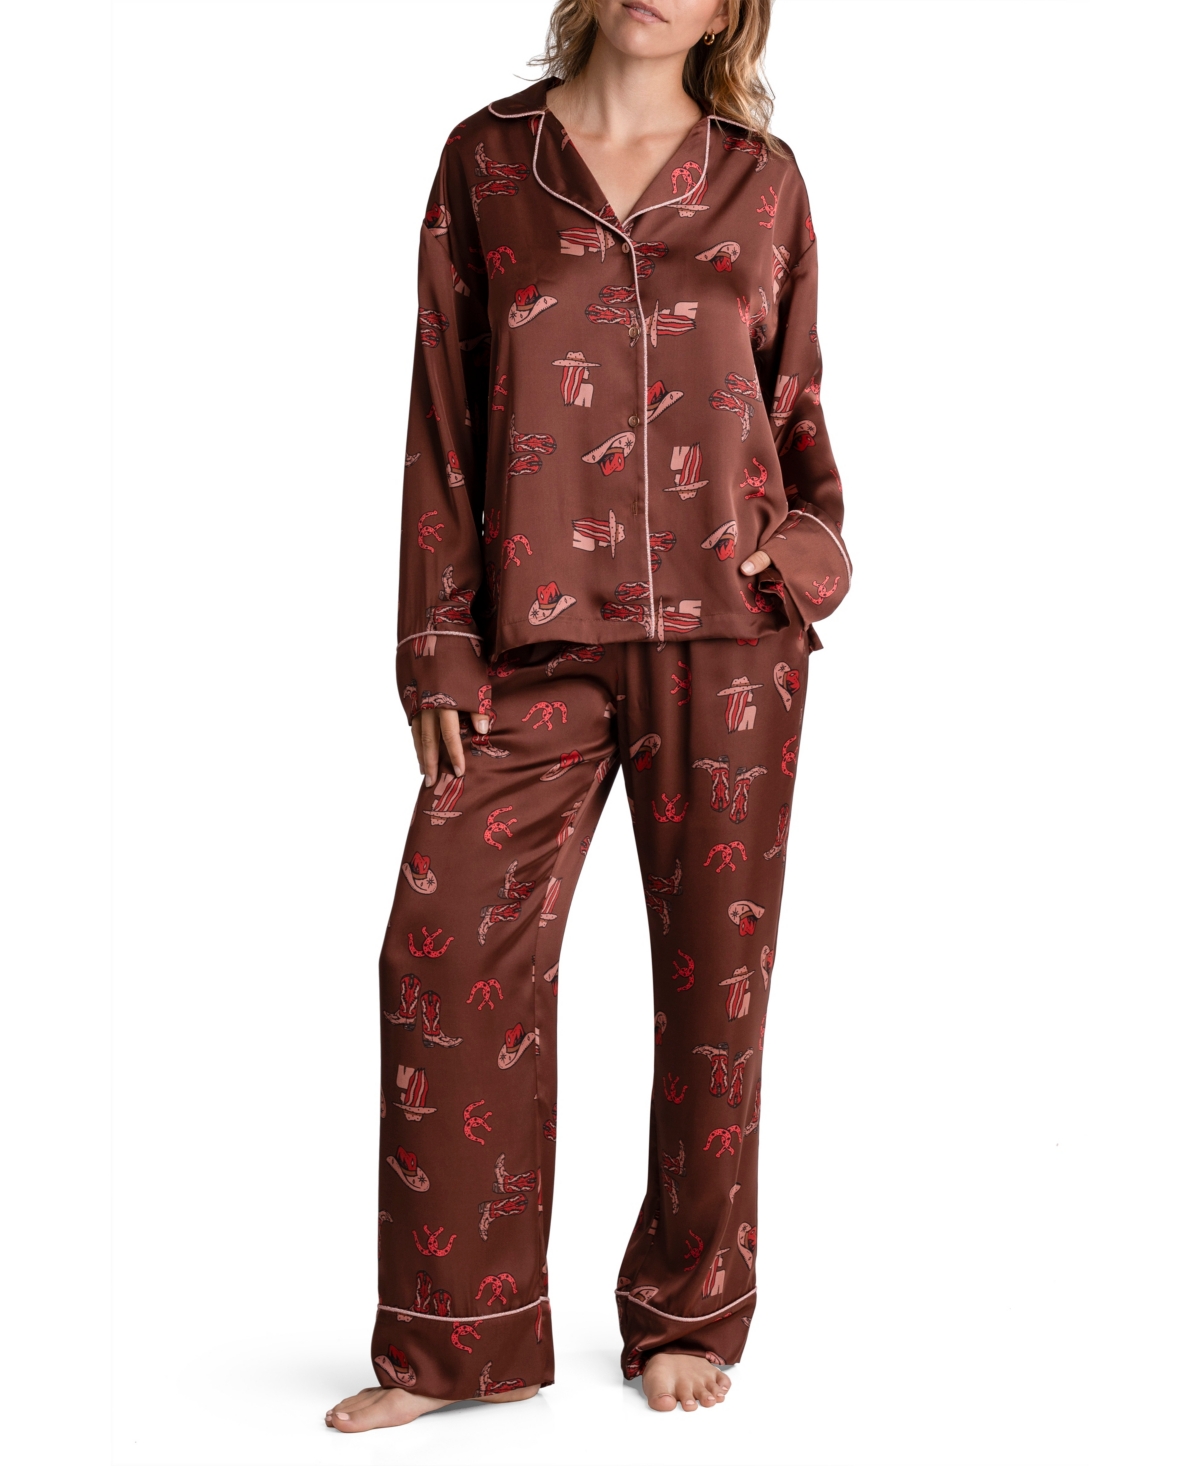 Women's Lingerie Carmella Satin 2 Piece Pajama Set - Brown